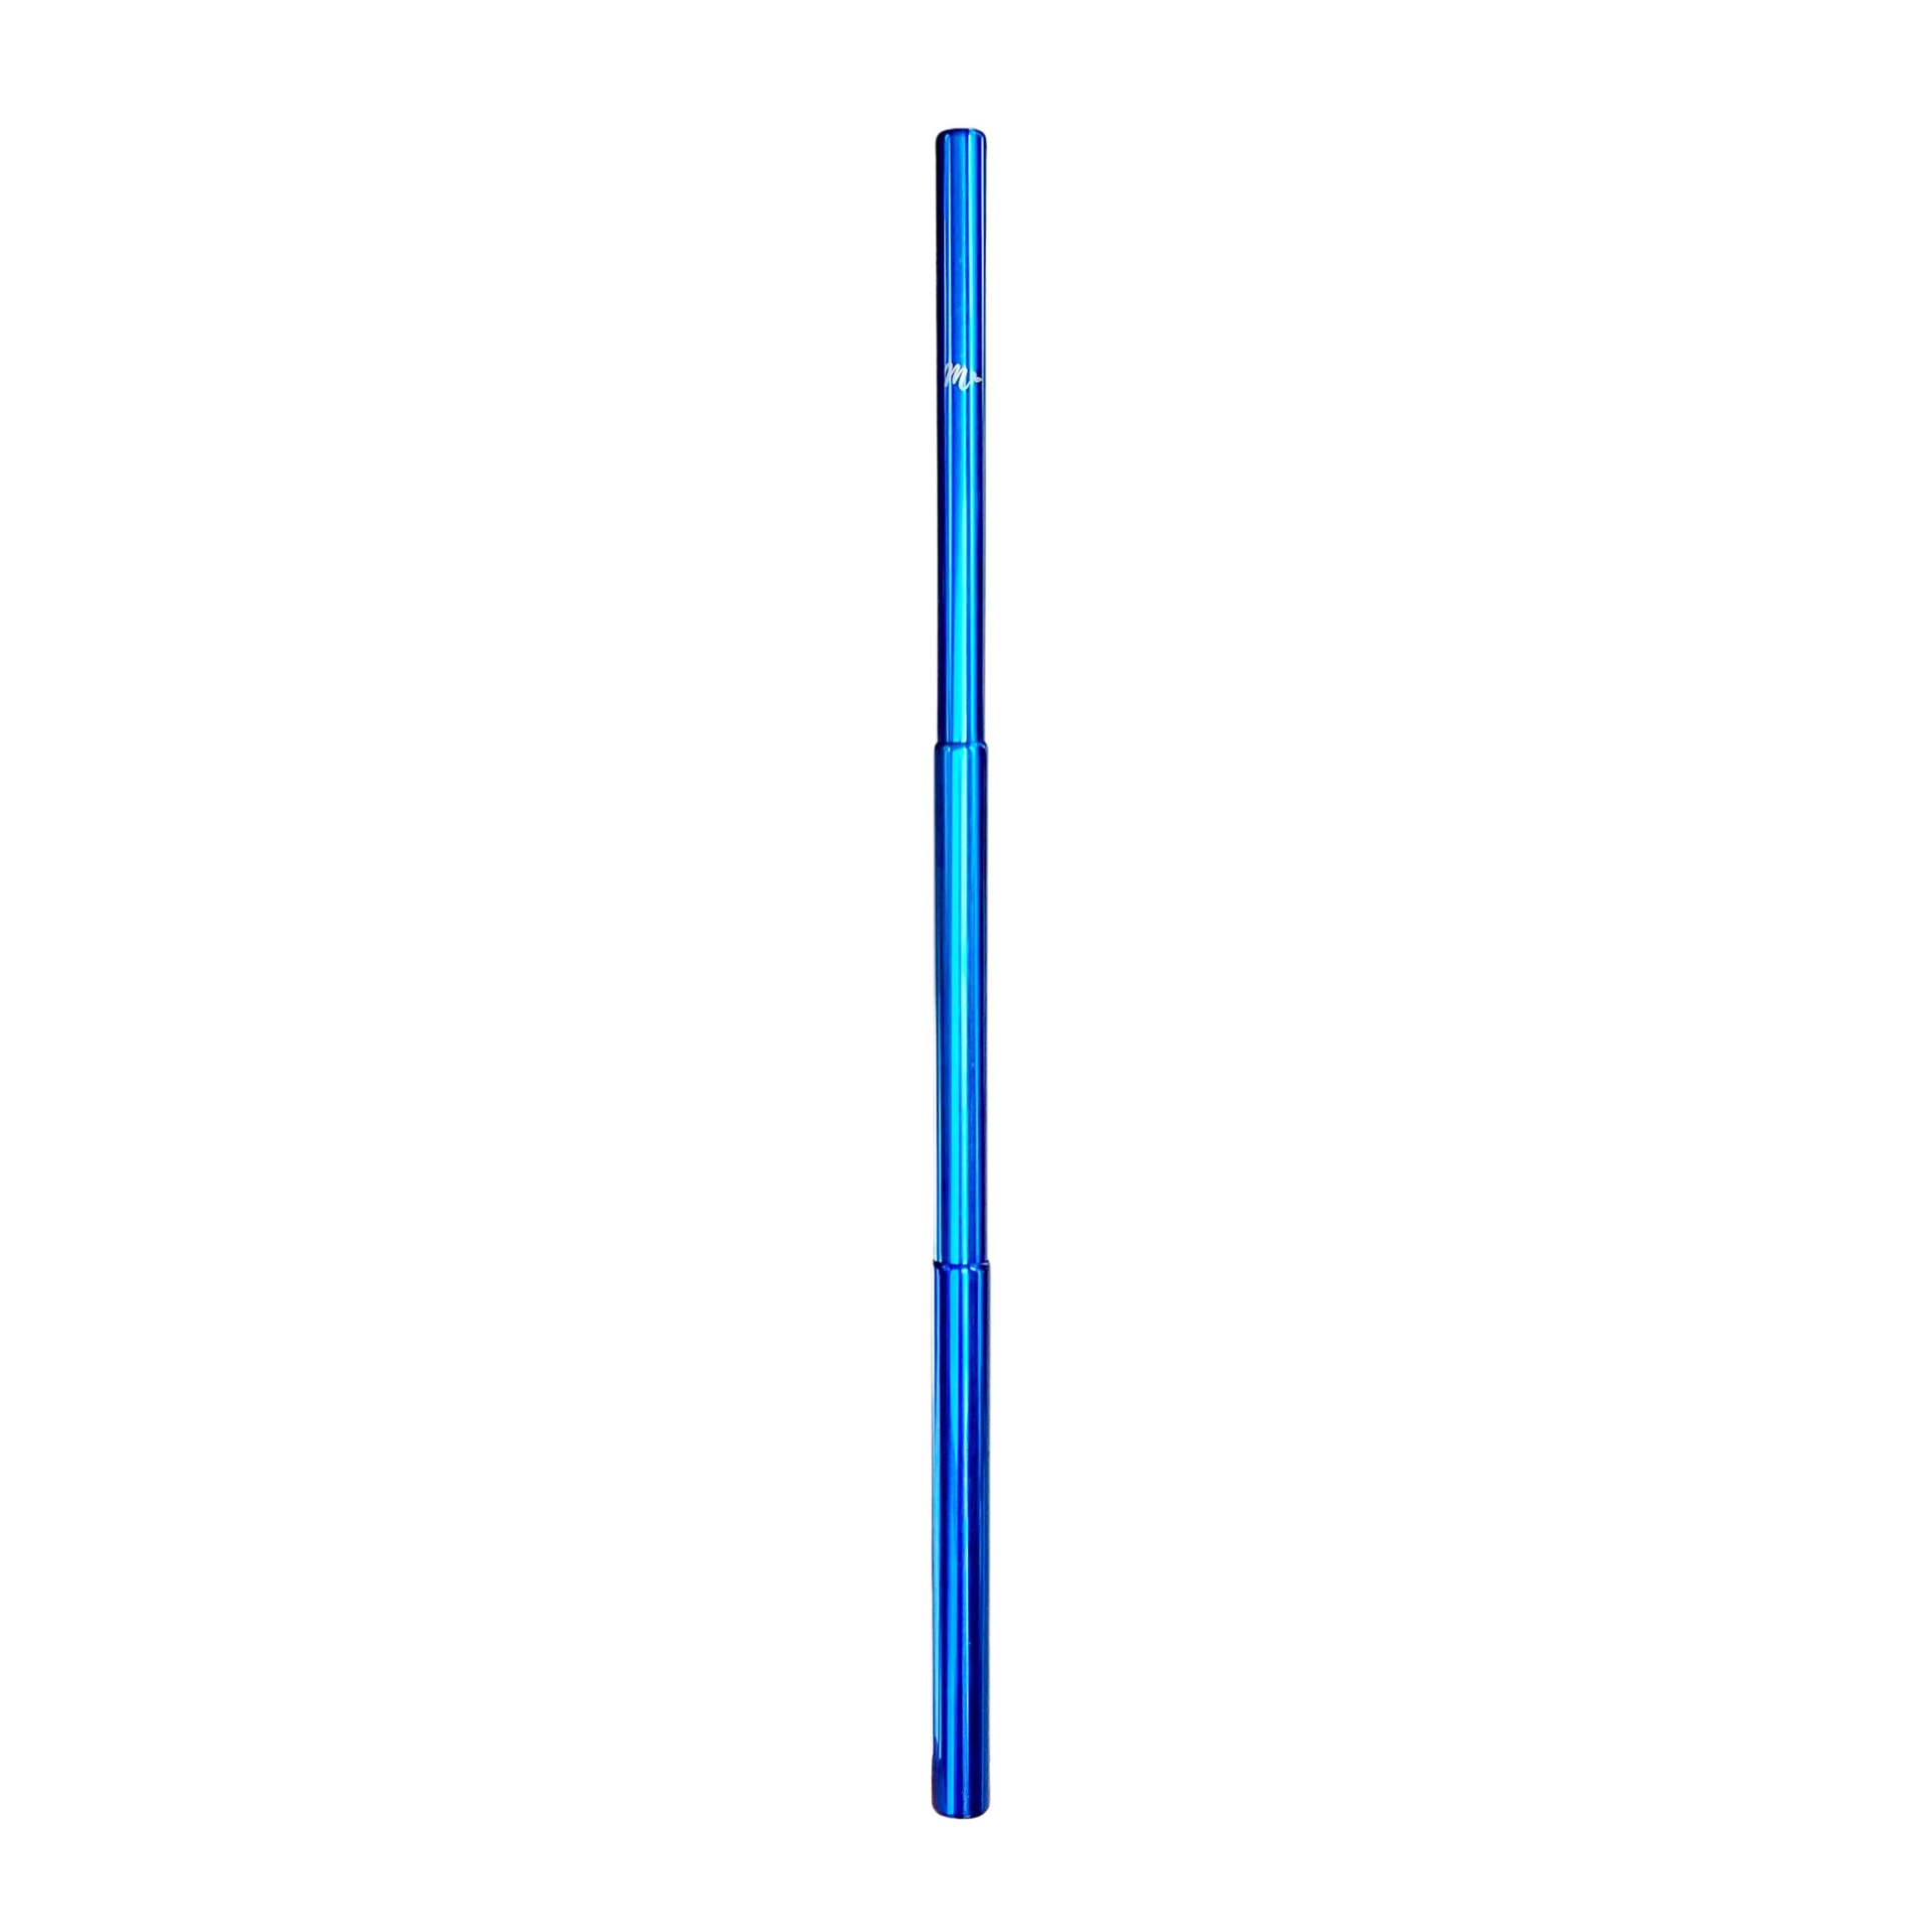 Ocean Blue Telescopic Mermaid Straw, Portable Straw, Reusable Straw